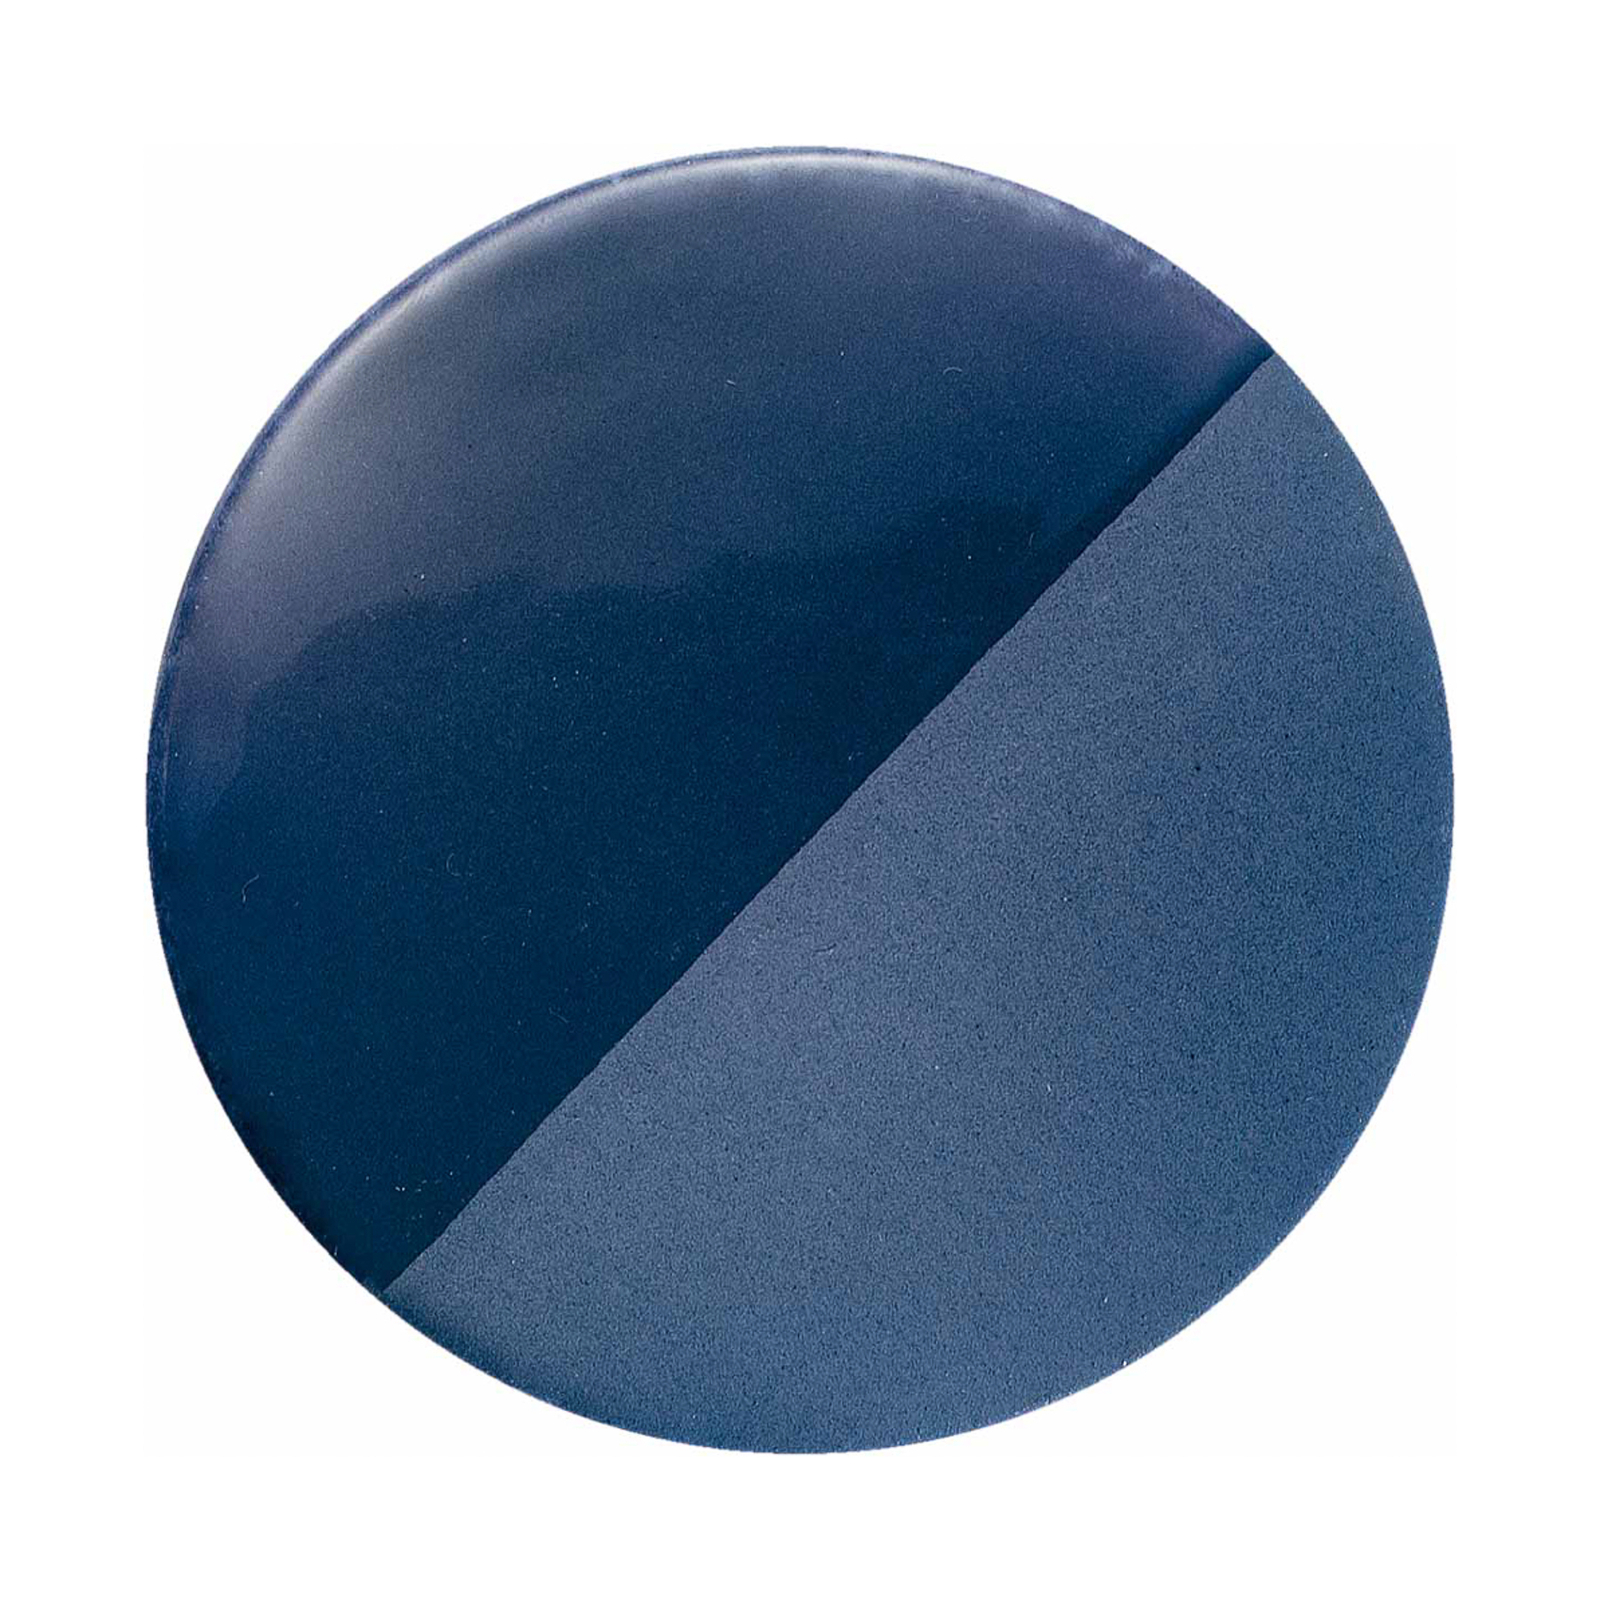 Caxixi pendant light made of ceramic, blue